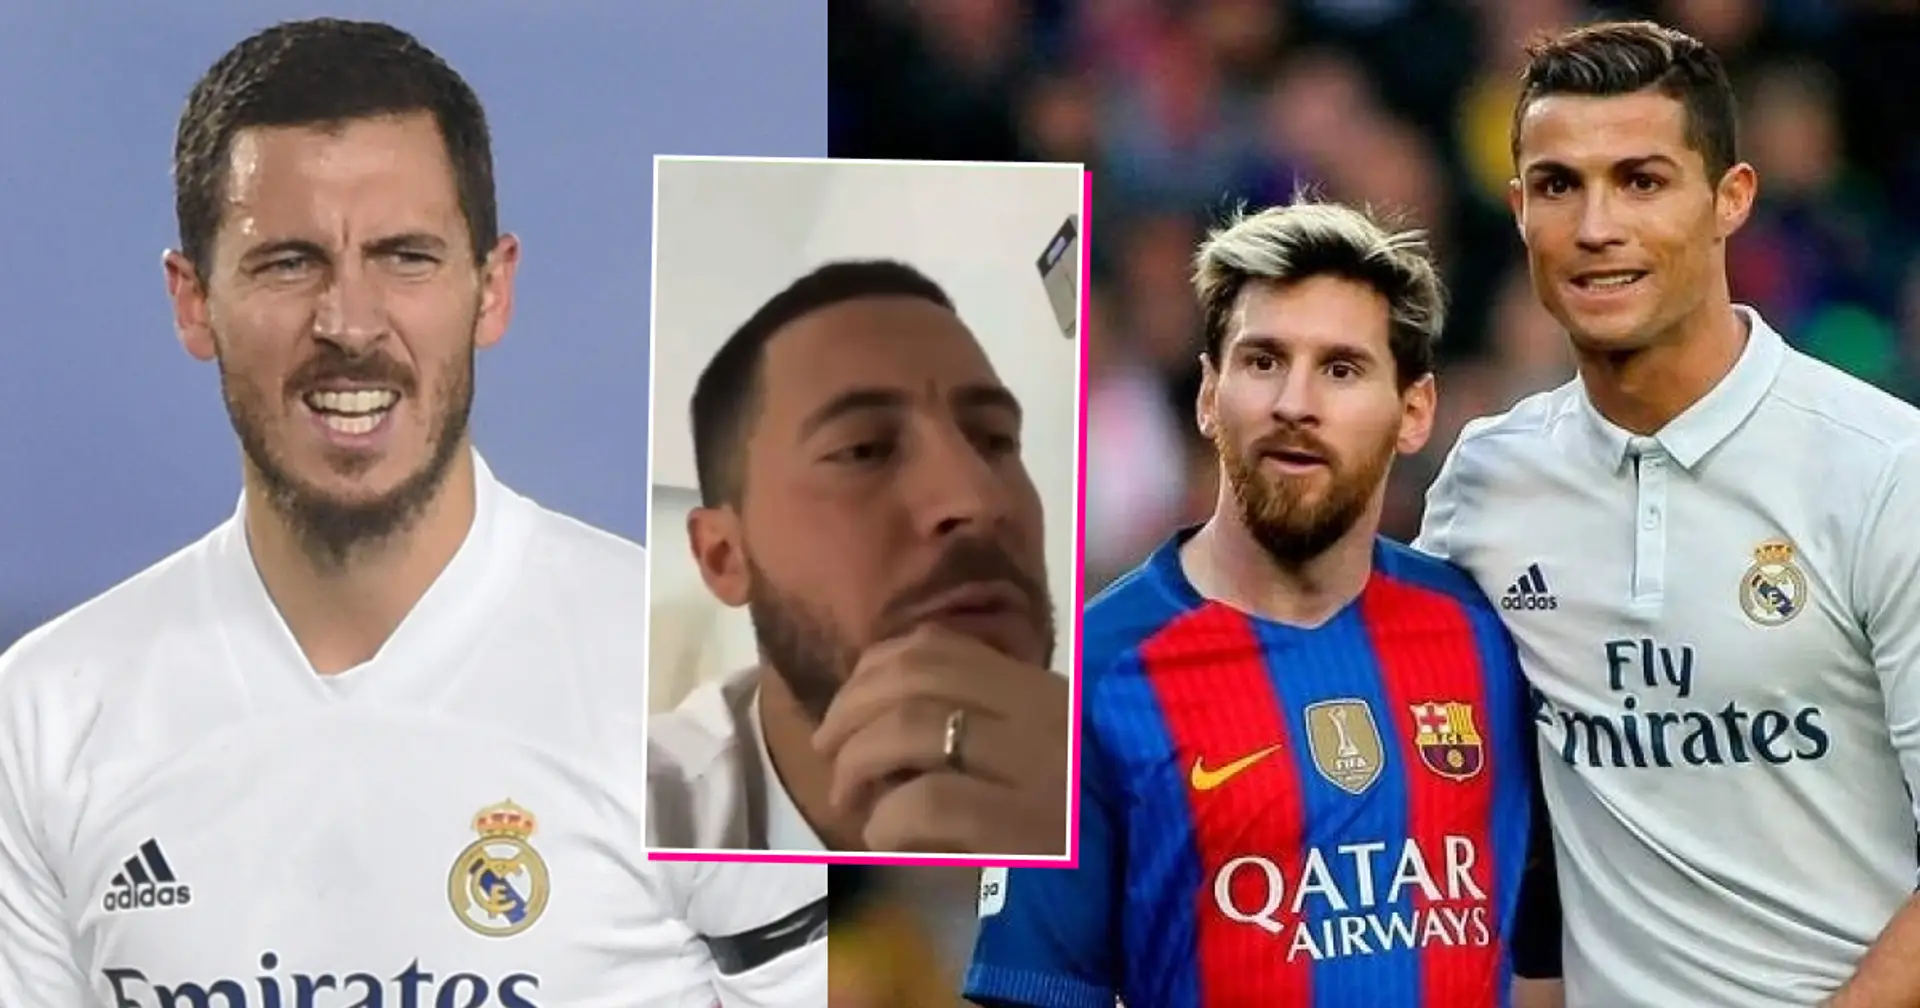 Eden Hazard picks third player in Messi v Ronaldo debate - they met in Madrid